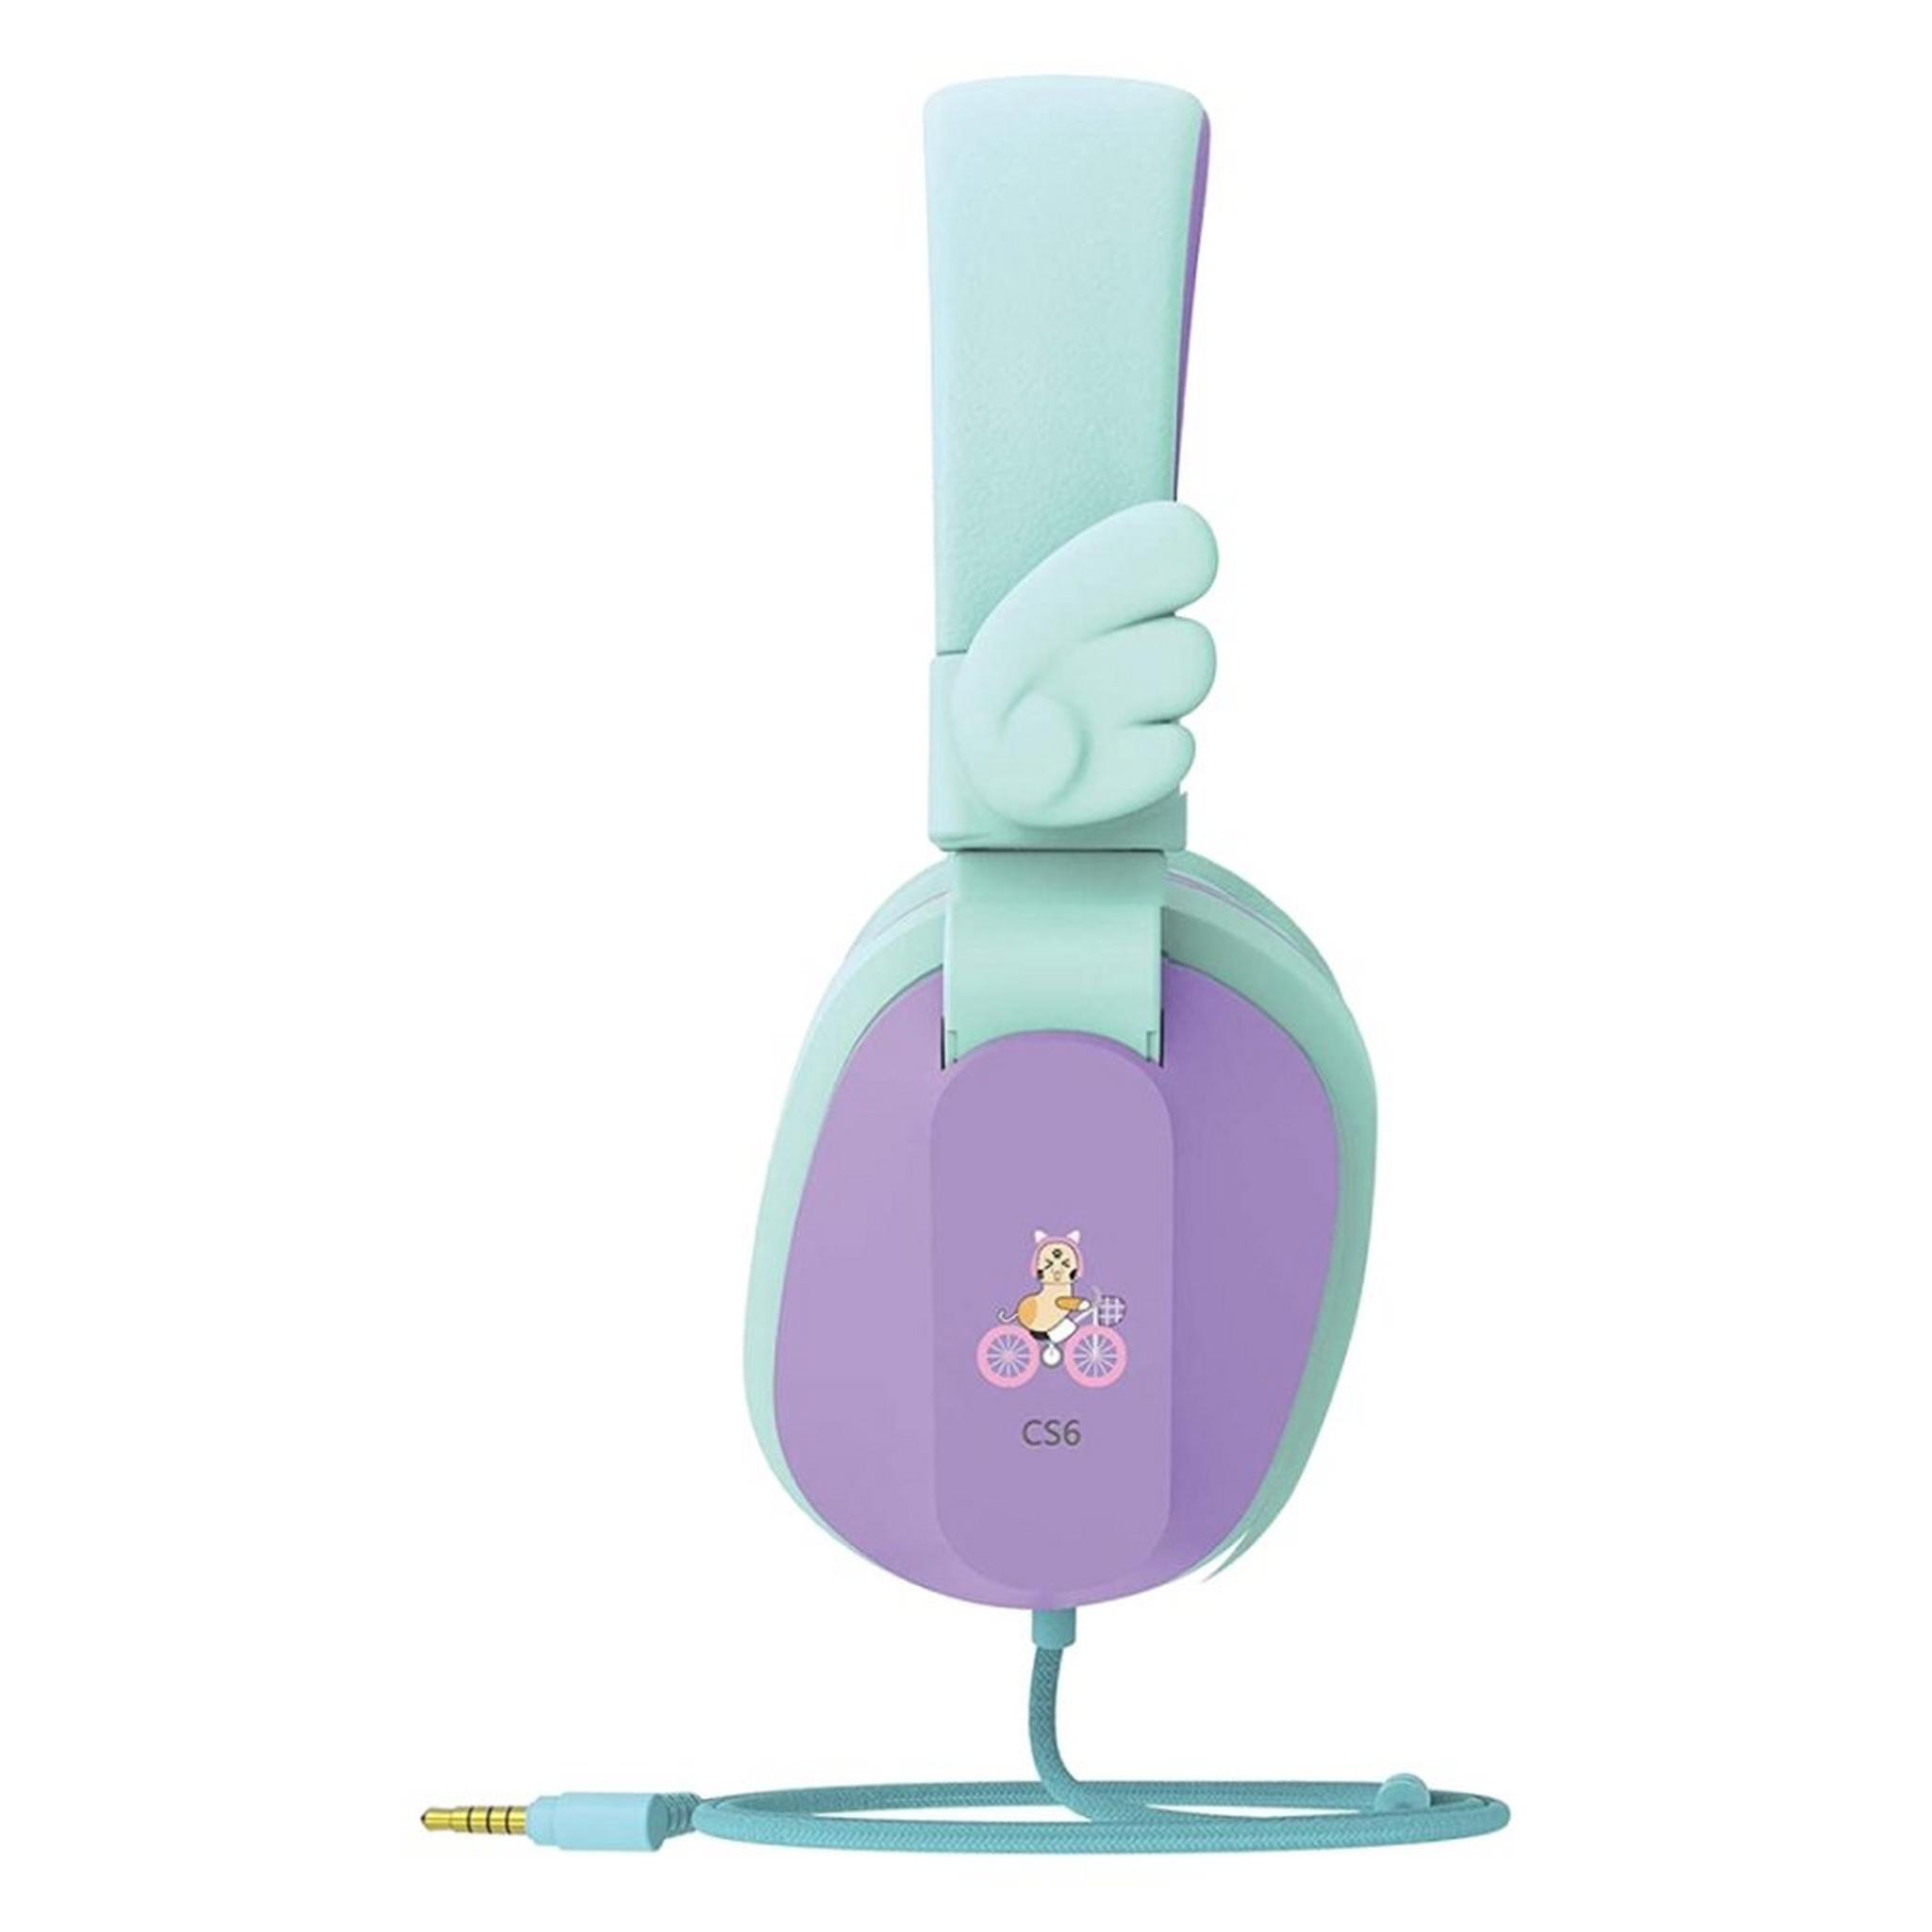 Riwbox Kids Wired Over-Ear Headphones - Purple/Green